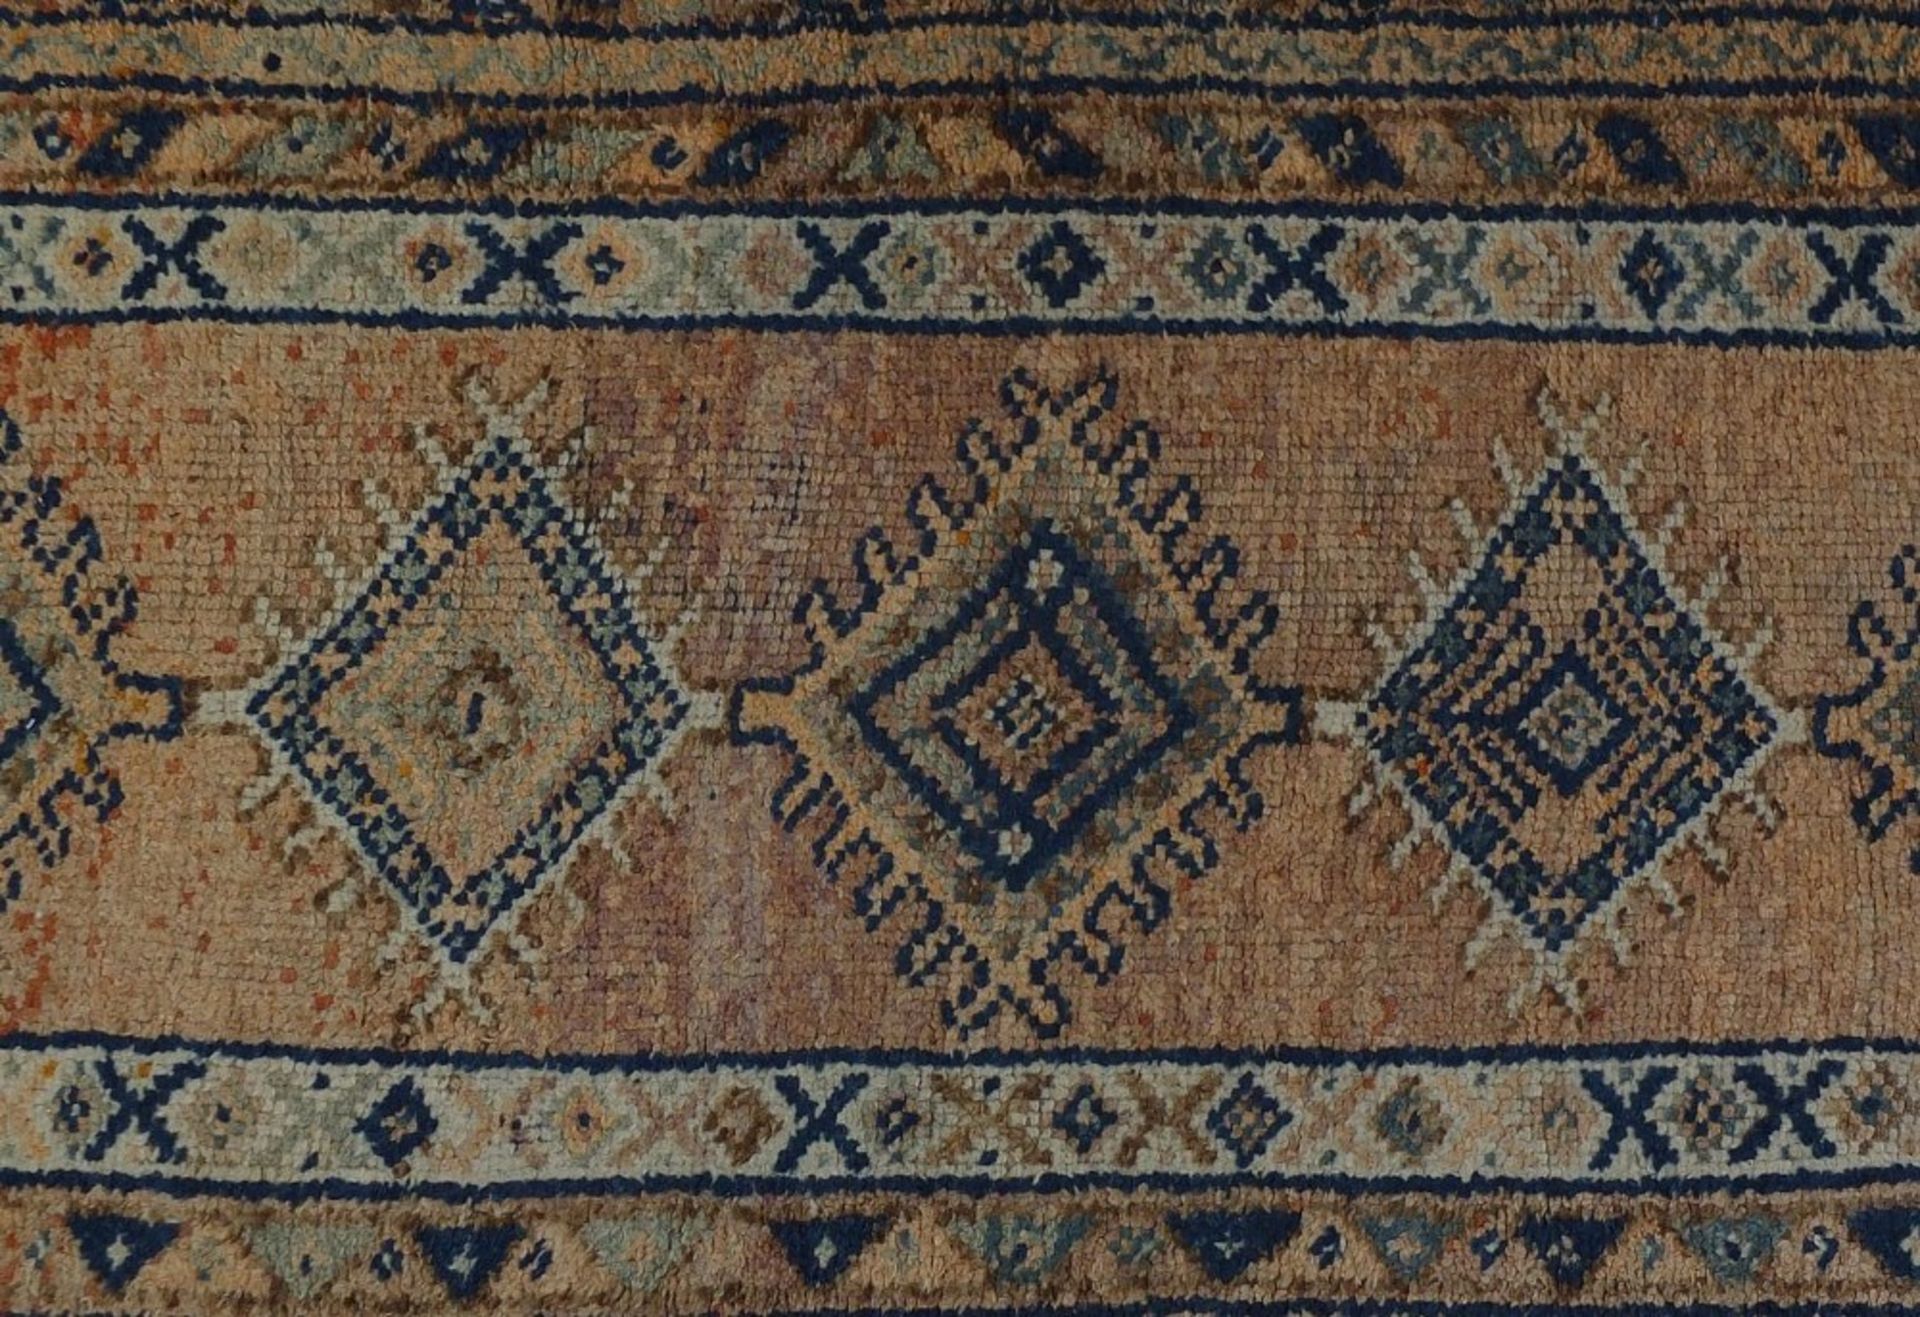 Rectangular Turkish kilim design carpet runner wtith repeat central medallion, 270cm x 104cm :For - Image 2 of 4